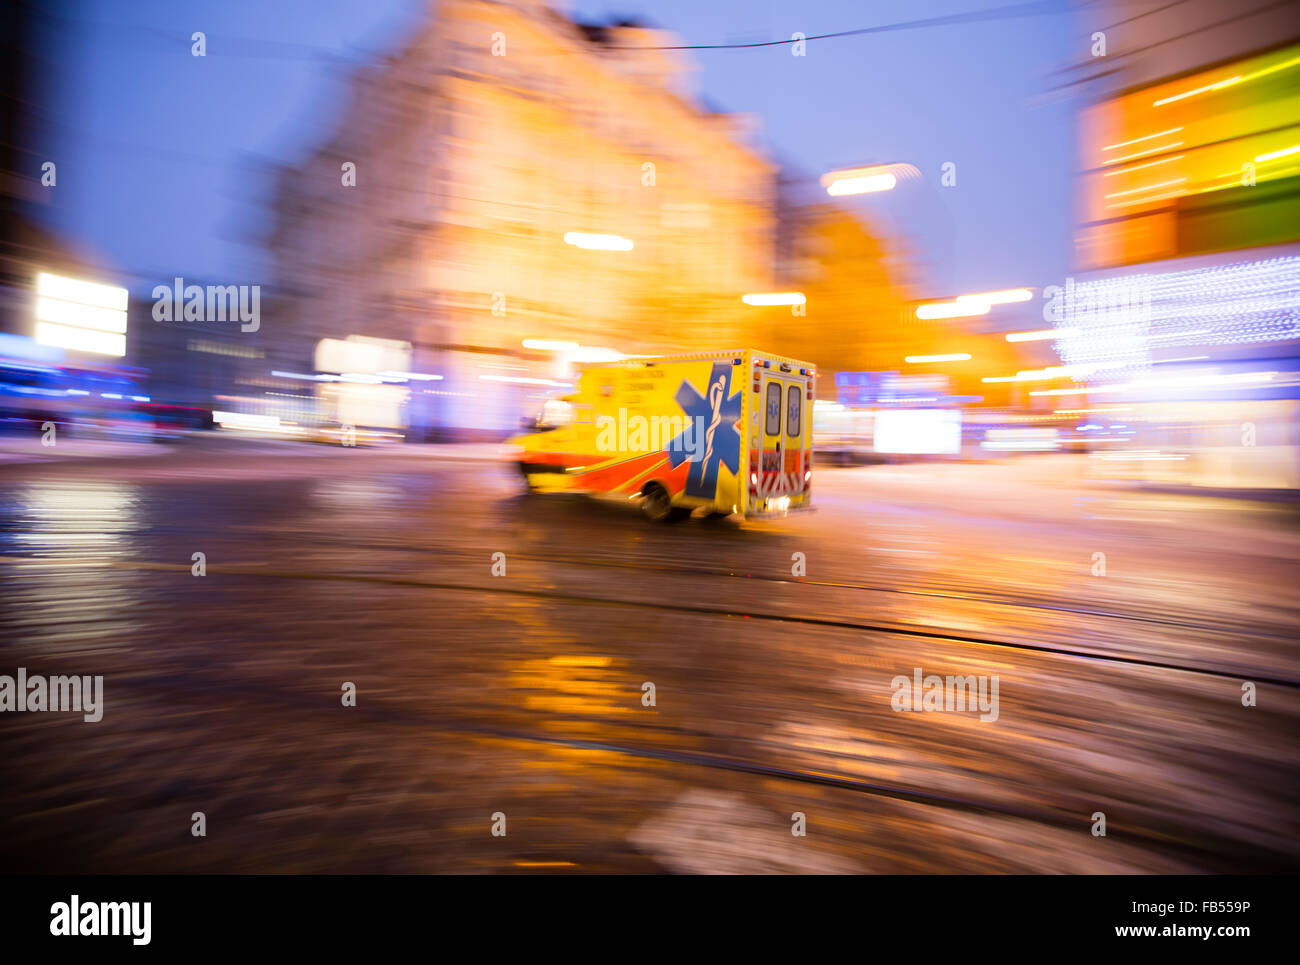 Ambulance on Emergency at city, blur motion Stock Photo